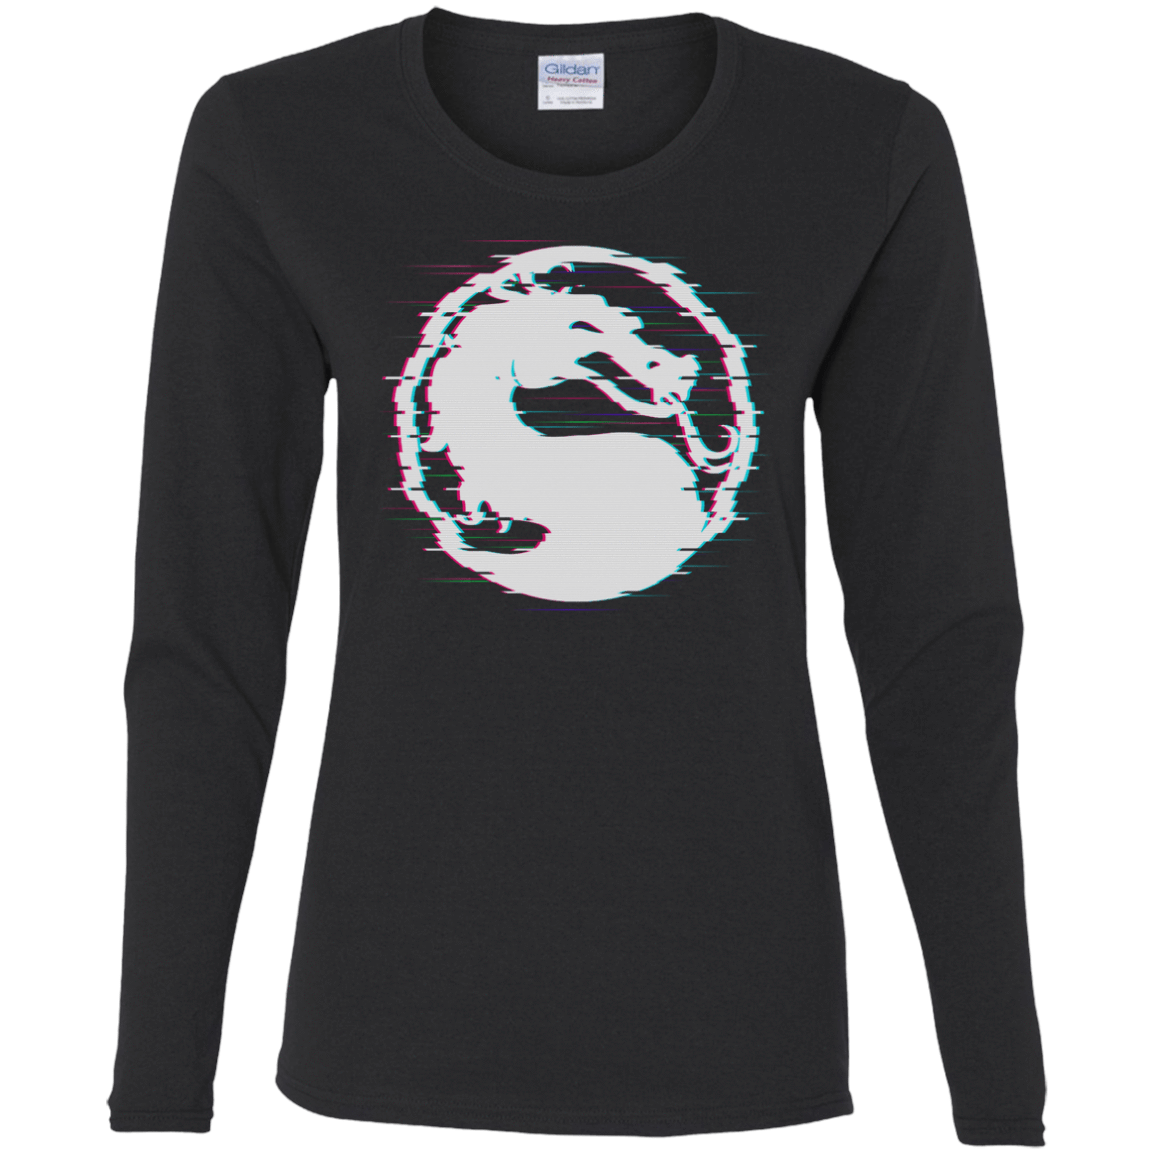 T-Shirts Black / S Mortal Glitch Women's Long Sleeve T-Shirt